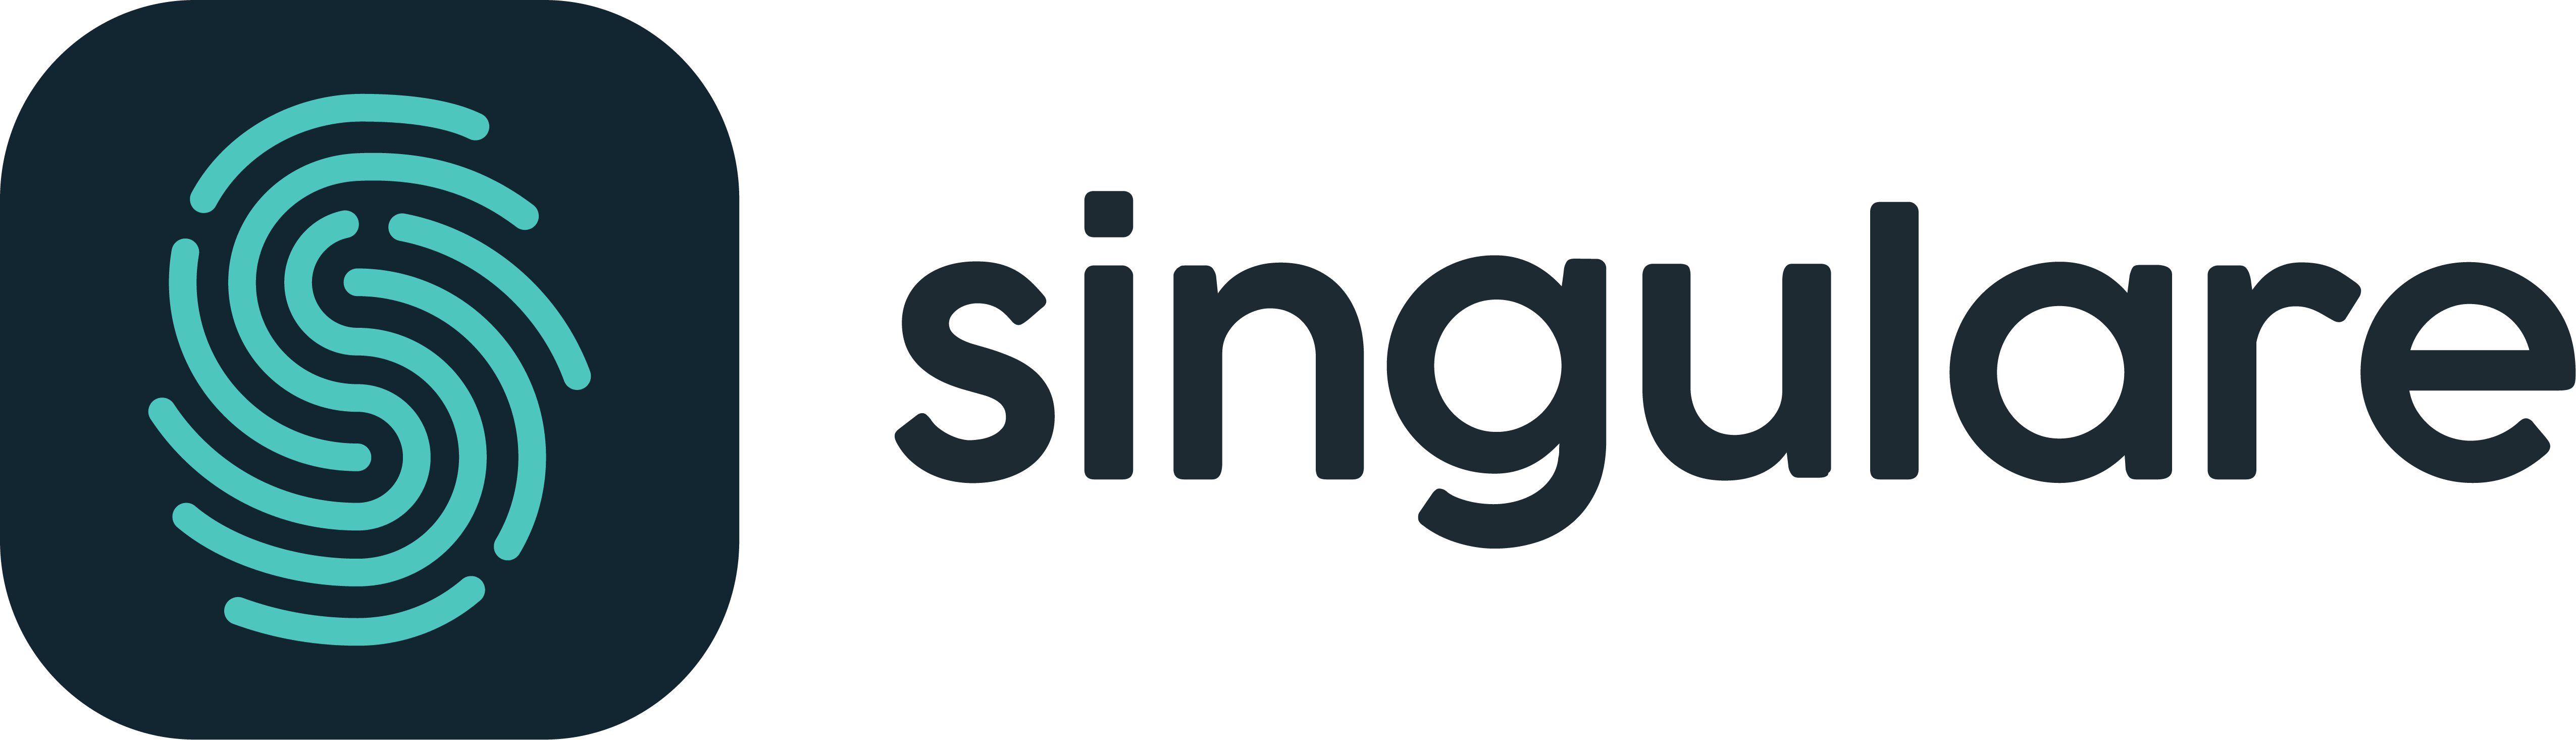 singulare-logo